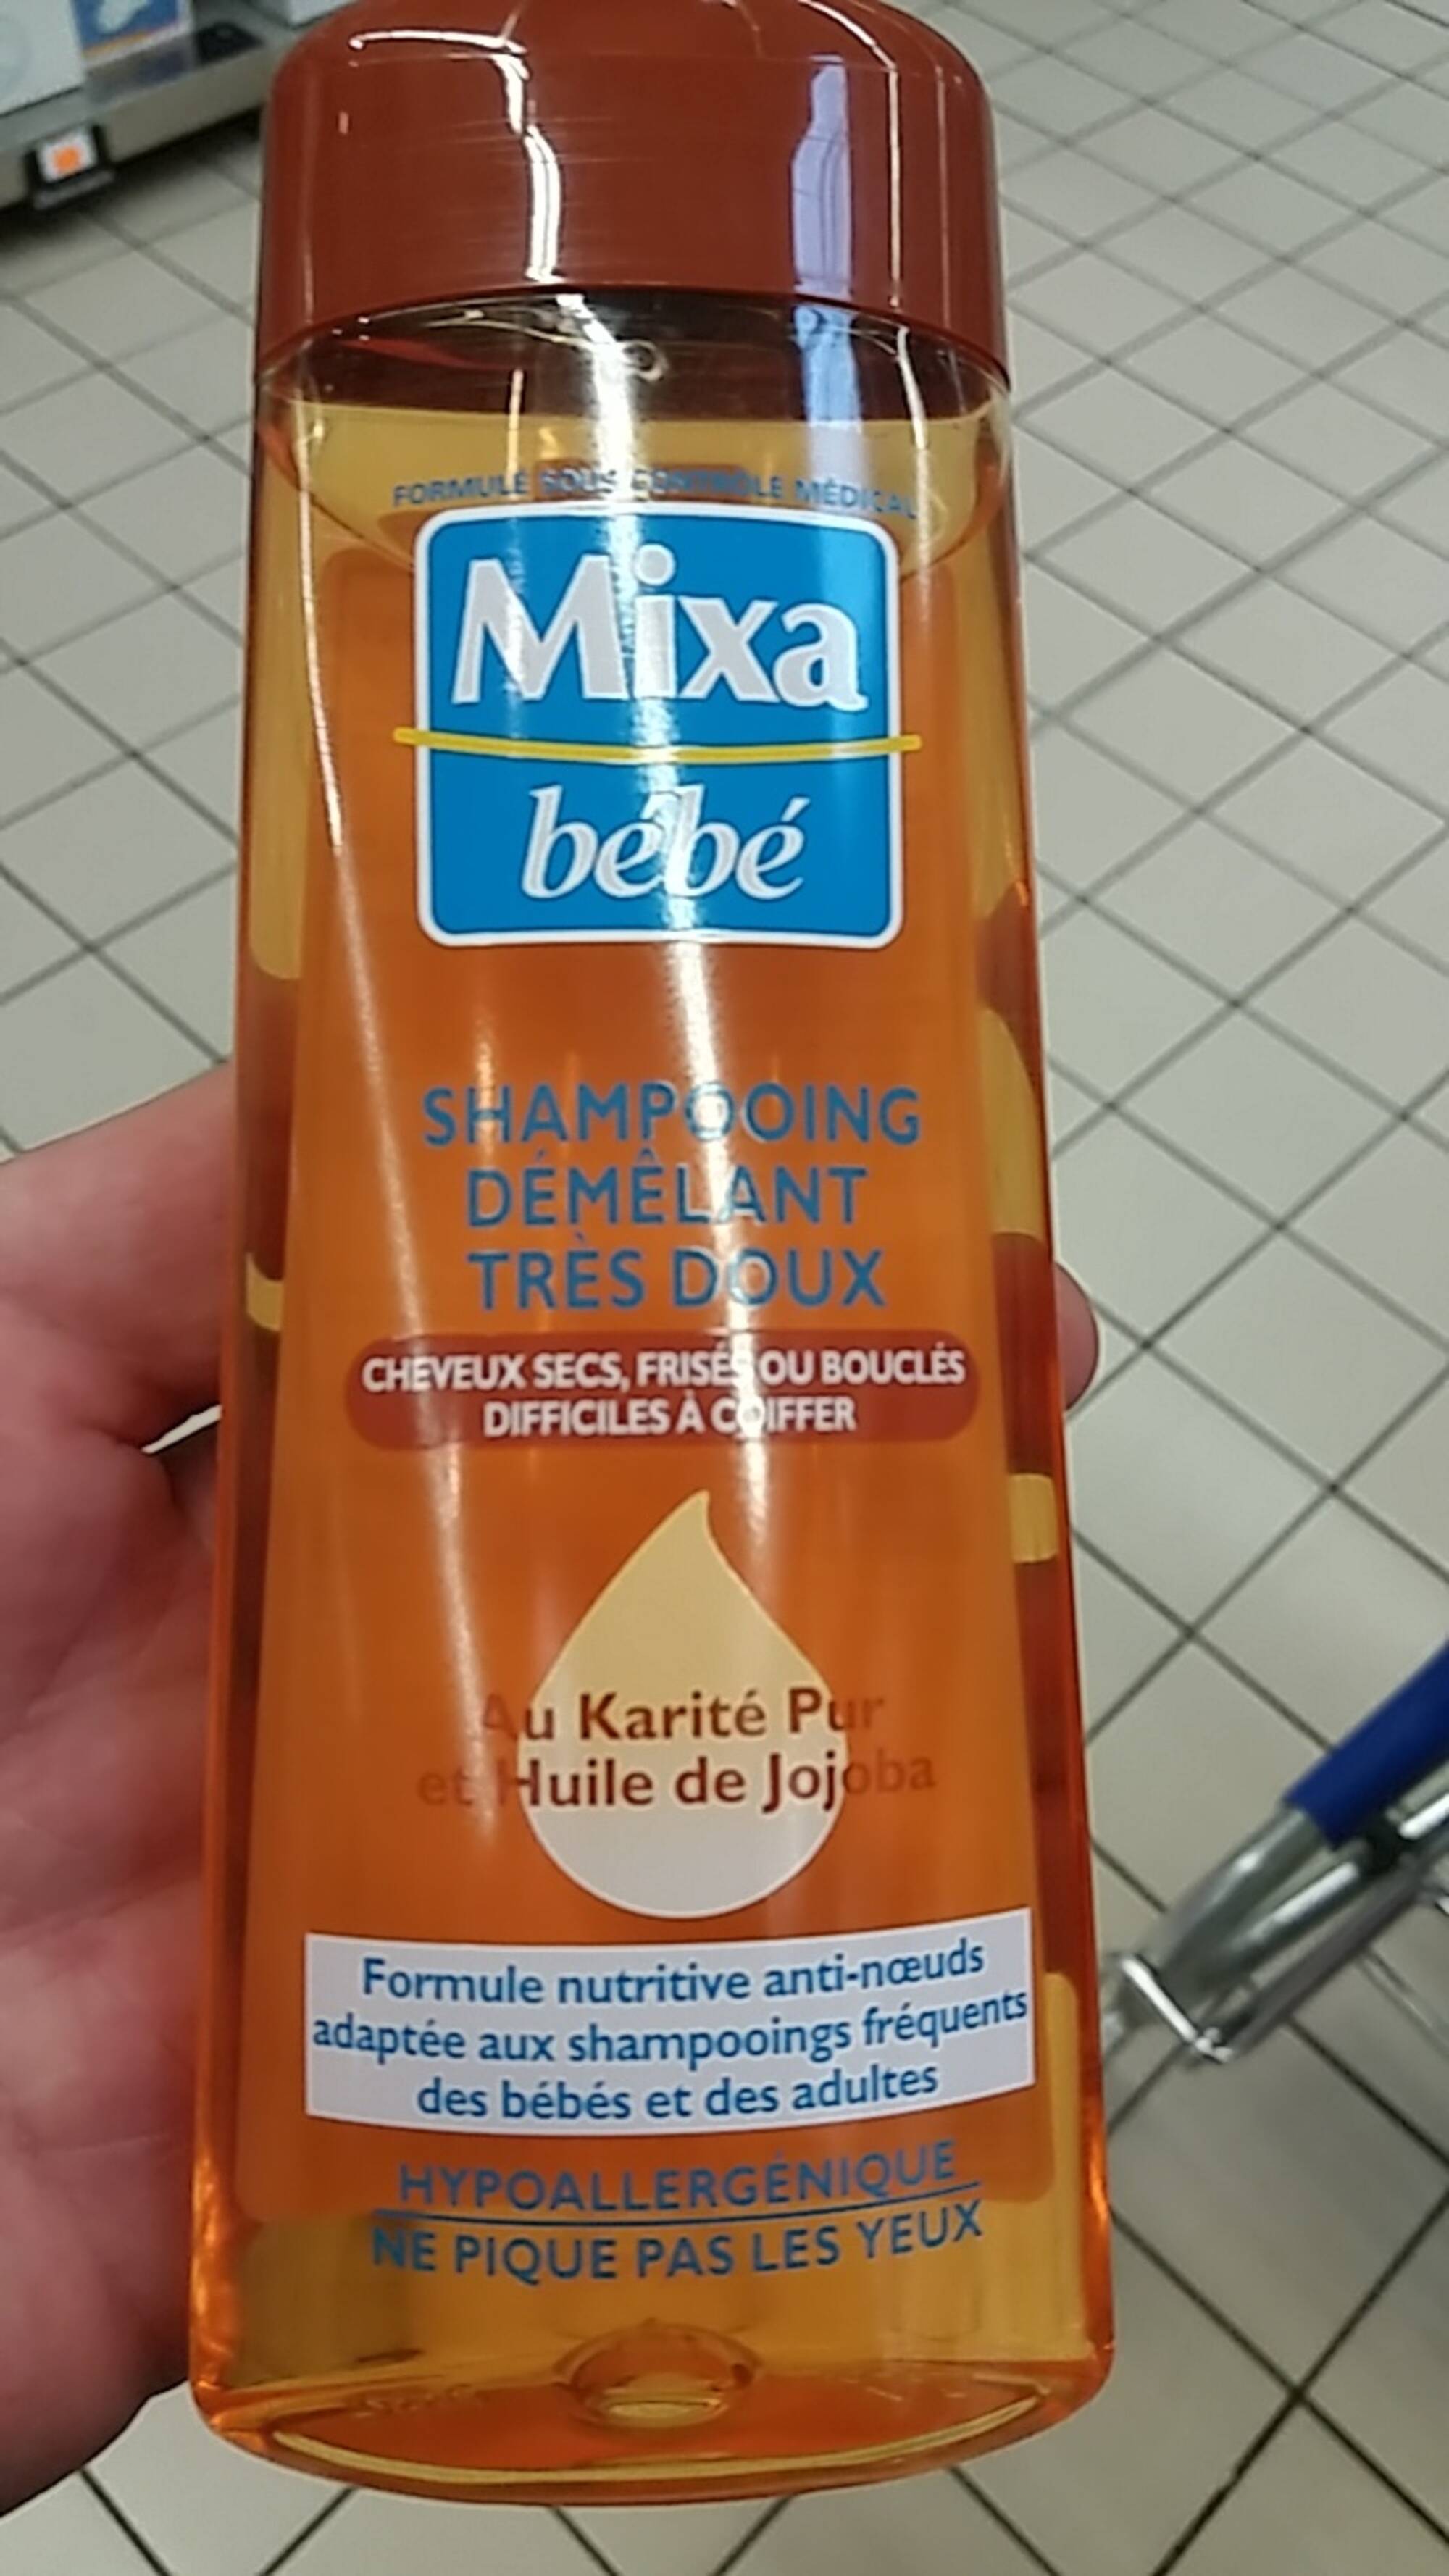 Shampoing Mixa bébé - Mixa